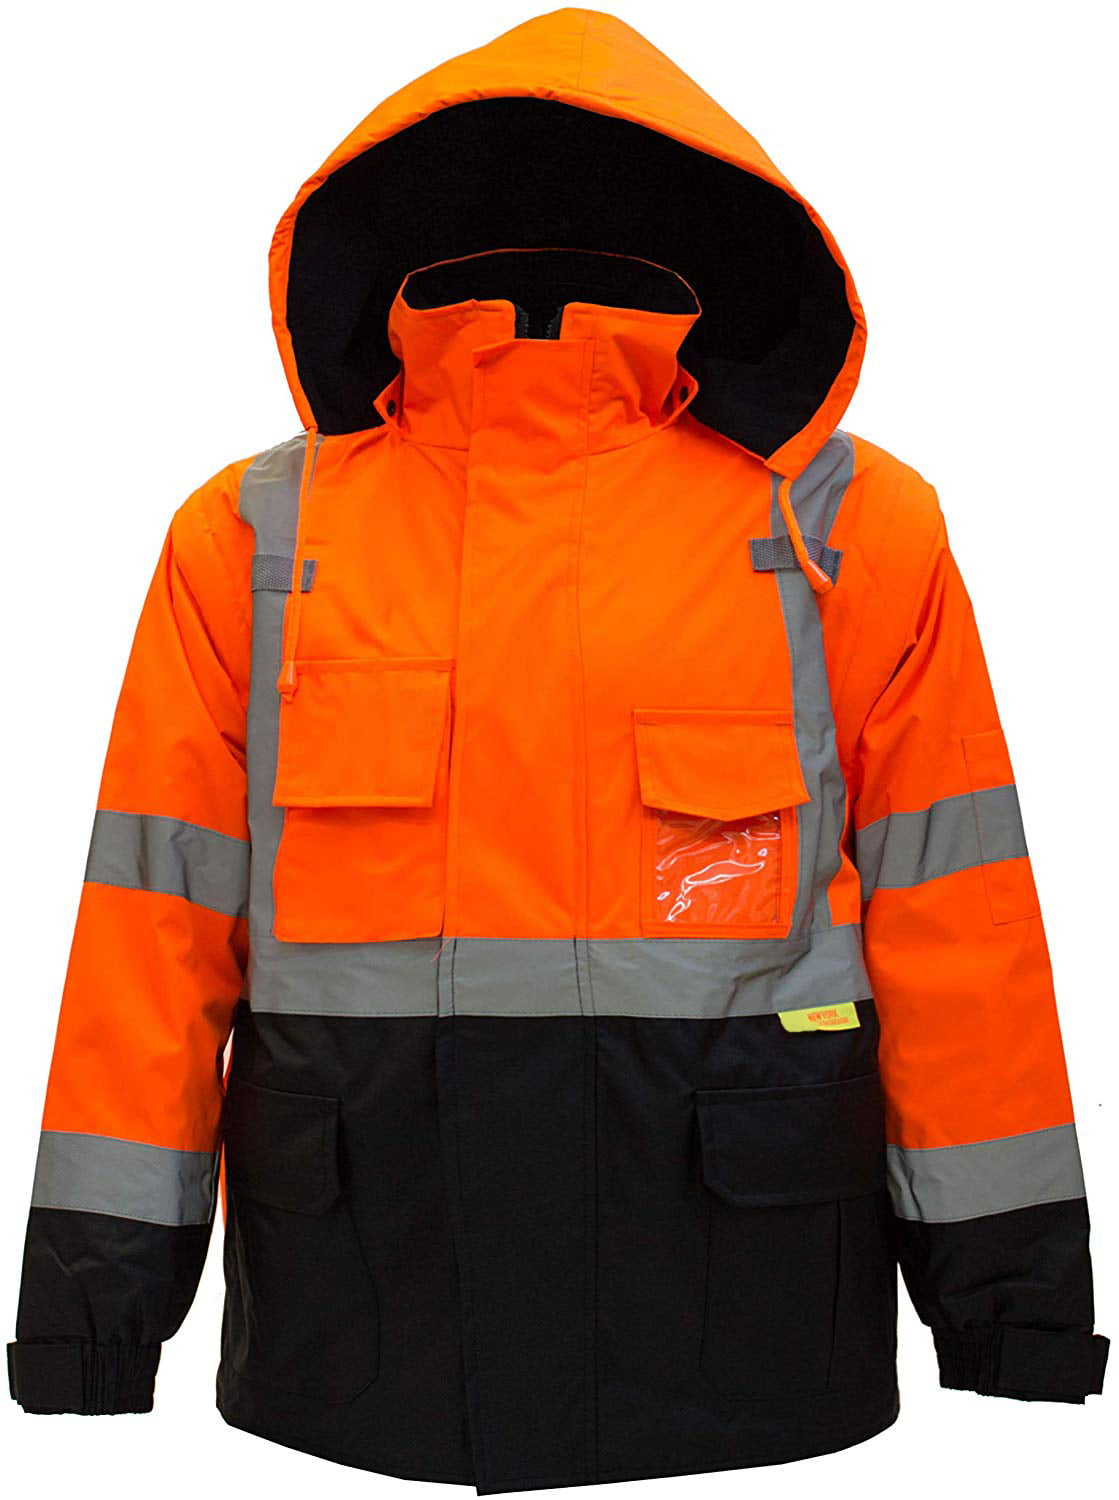 Contractor Hi Viz High Vis Visibility Bomber Work Jacket Coat Yellow or Orange 